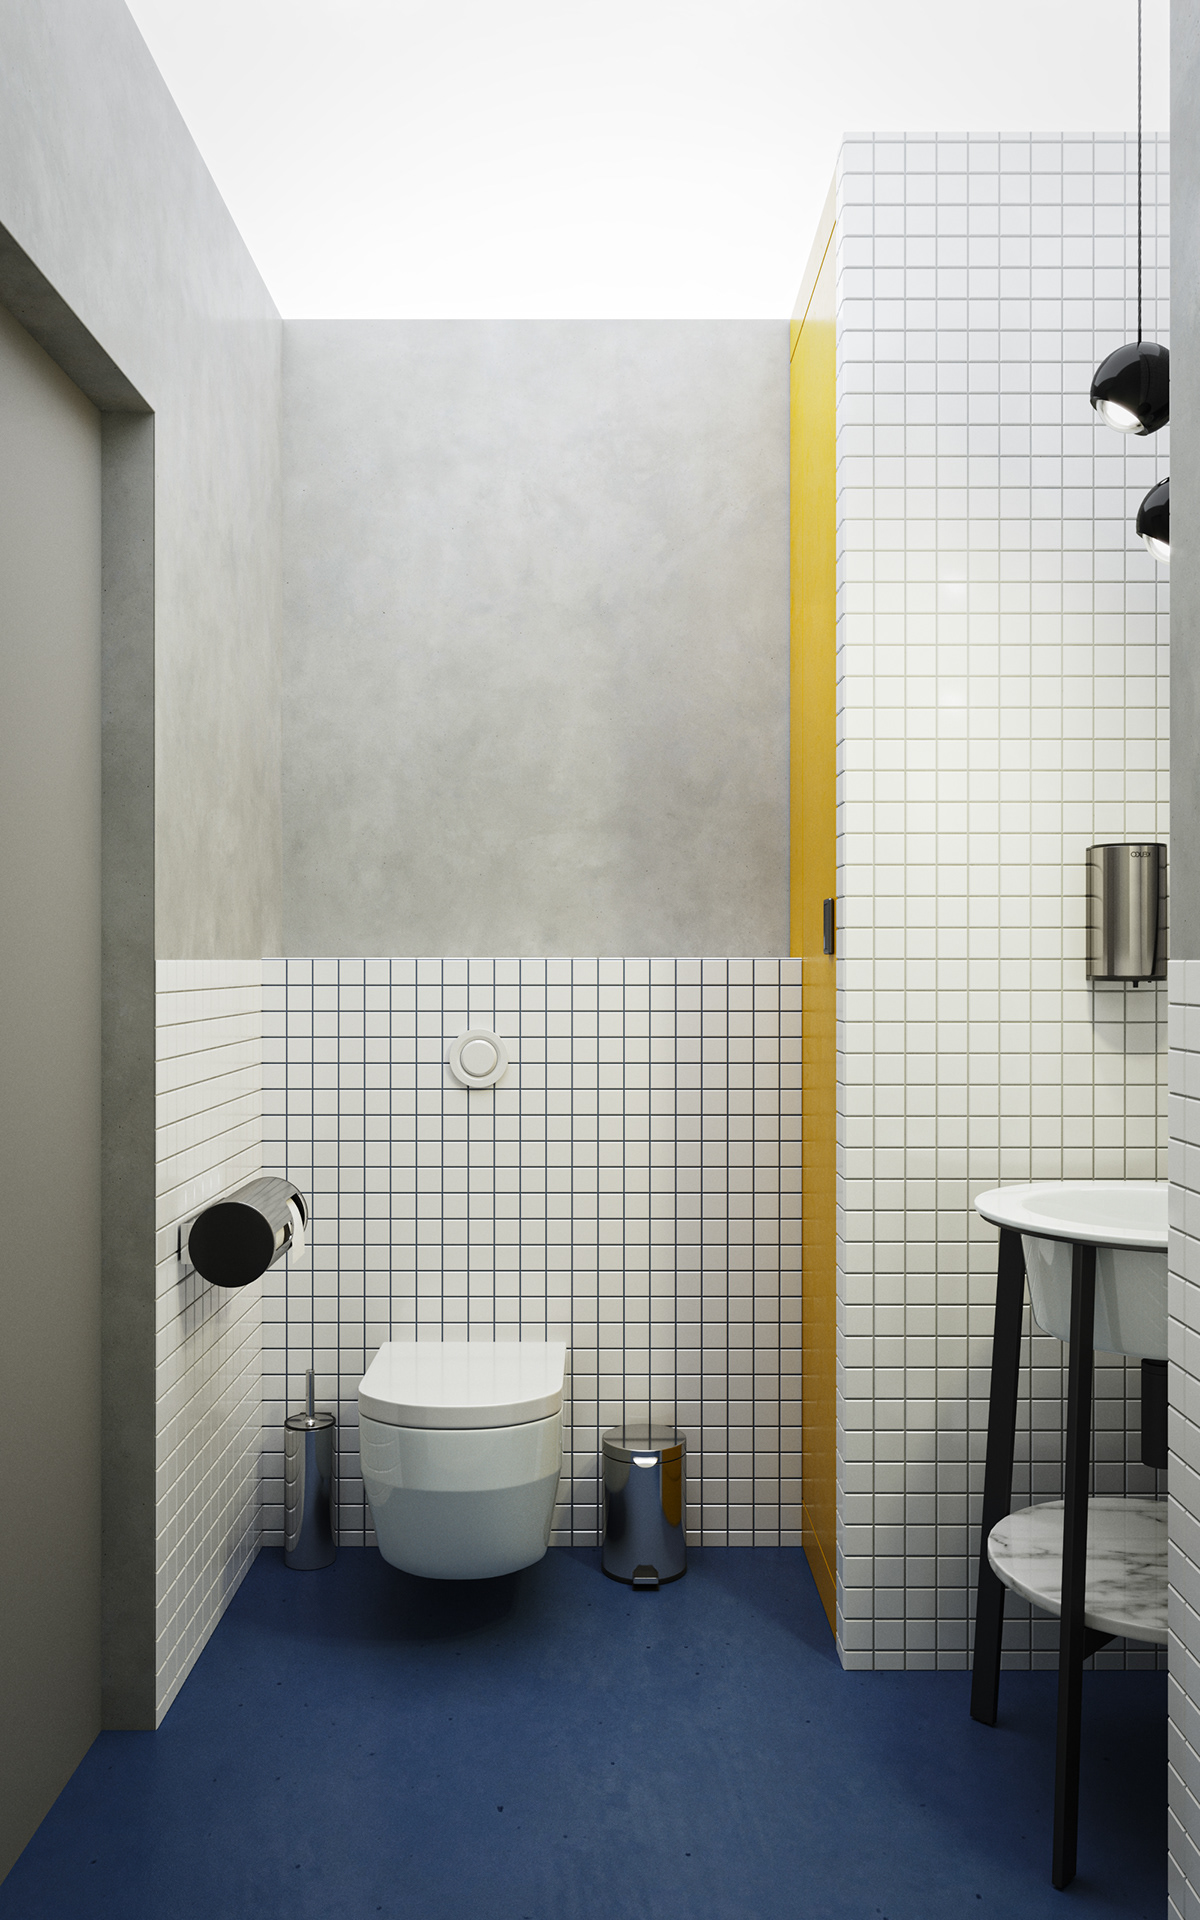 3ds max corona renderer interior design  toilet visualization визуализация дизайн интерьера туалет